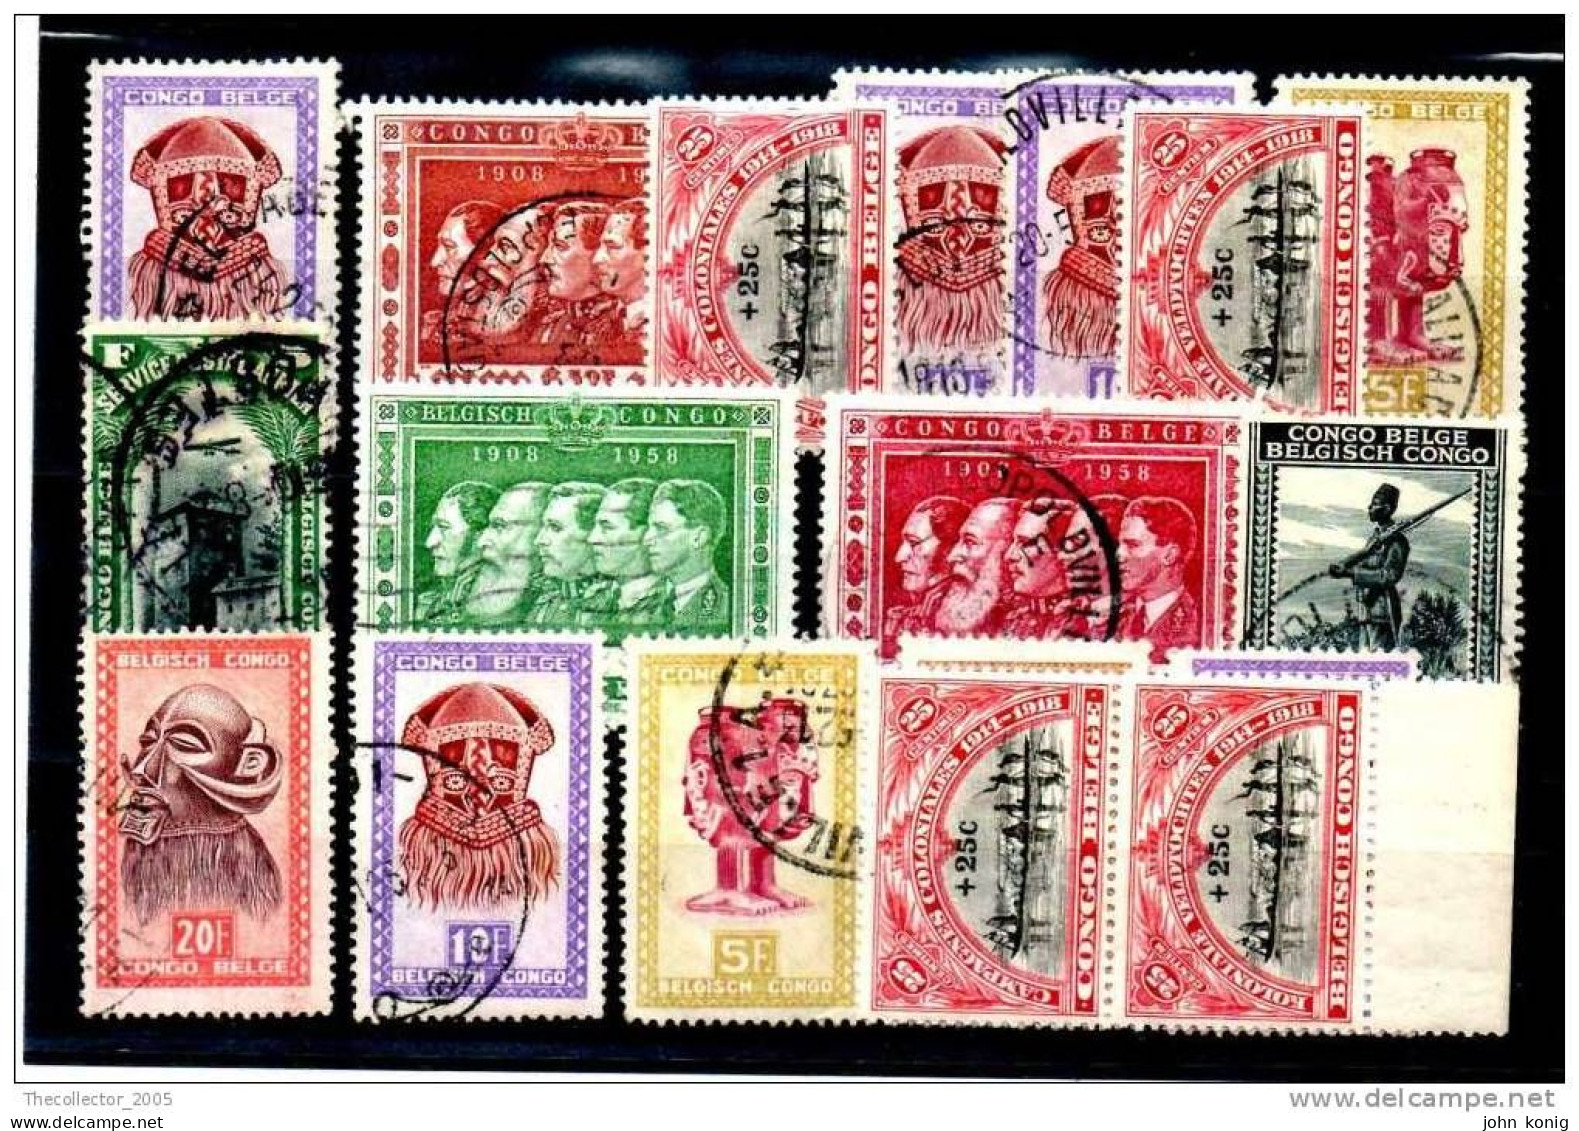 BELGIO (CONGO BELGA) - BELGIE (BELGISCH CONGO) - BELGIQUE (CONGO BELGE) - Lotto Misto Francobollii - Mixed Stamps Lot - Colecciones